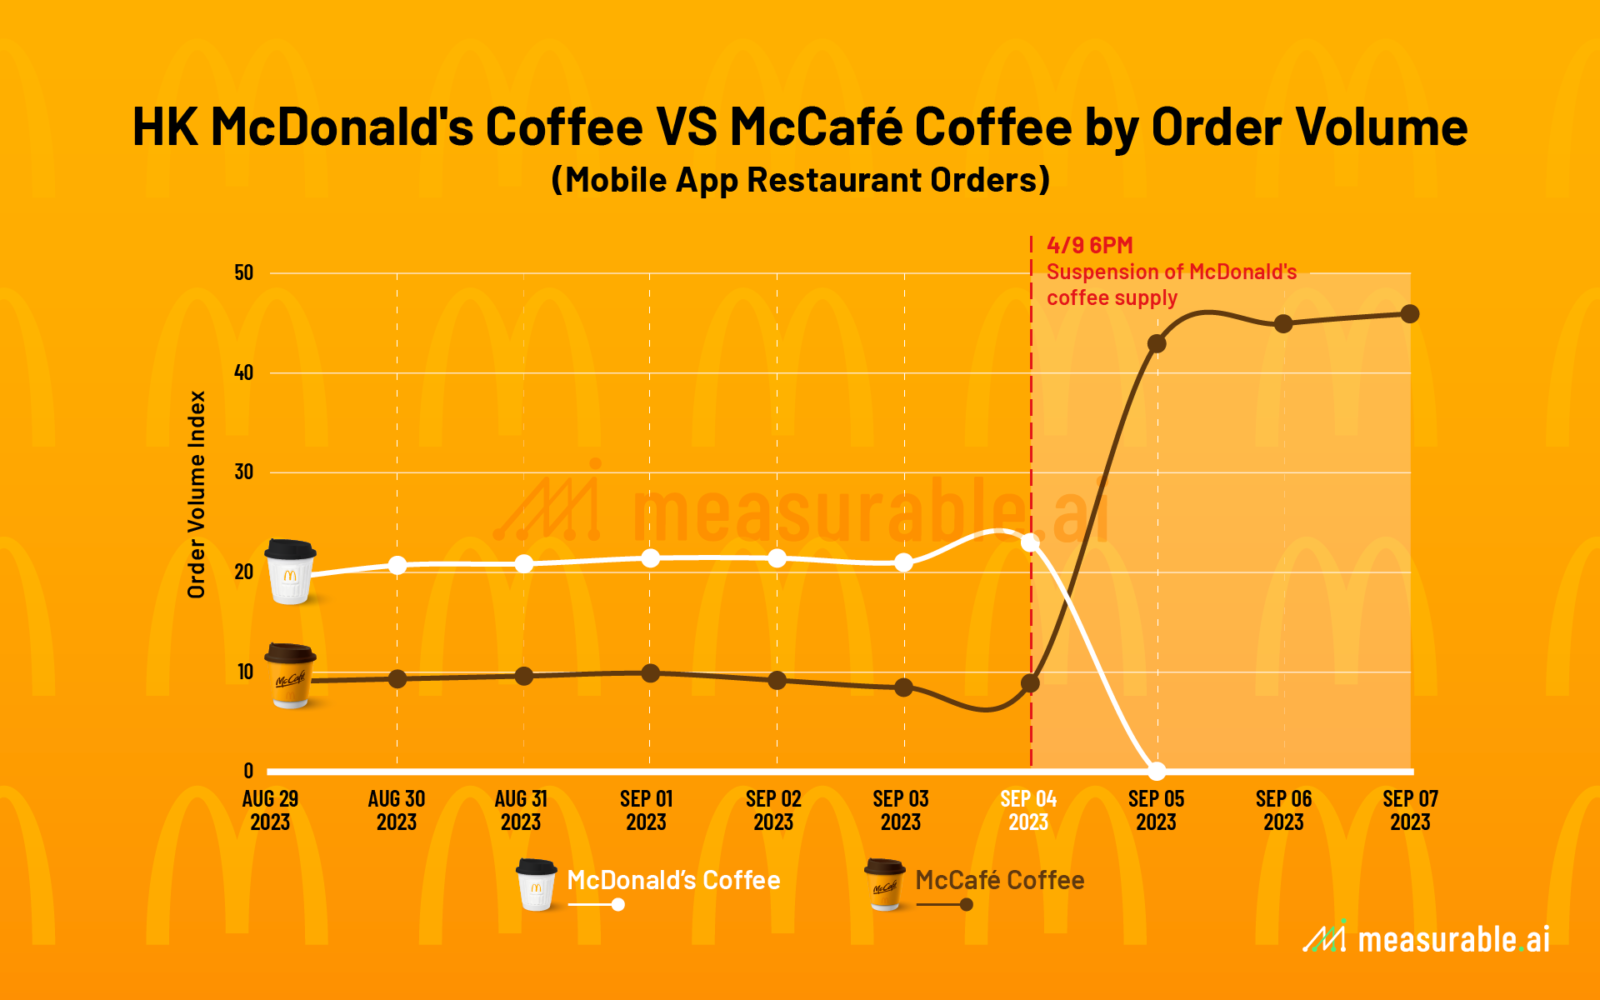 HK McDonald's Coffee VS McCafé Coffee by Order Volume